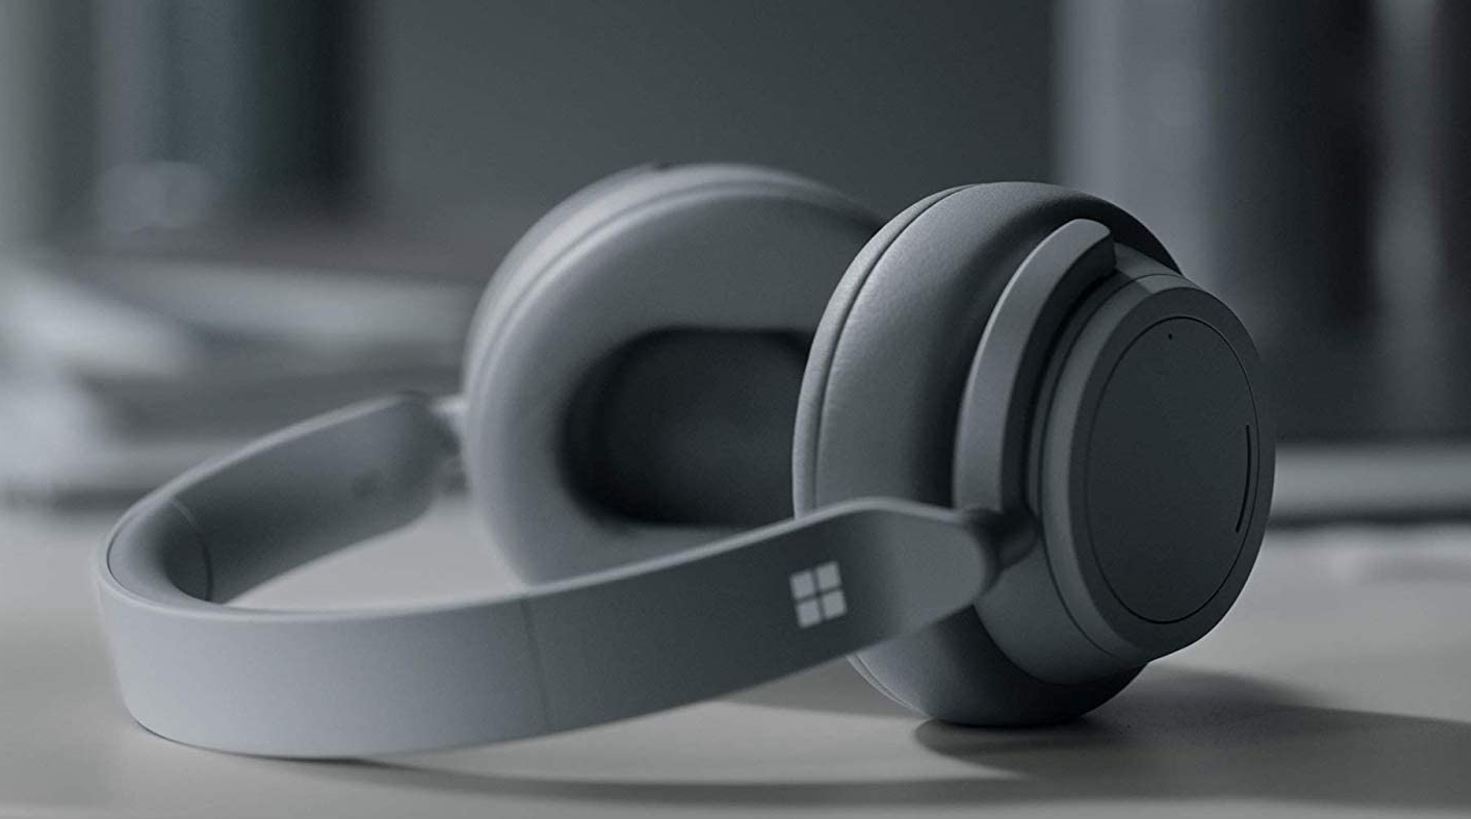 Microsoft Surface Headphones Amazon Promo Image